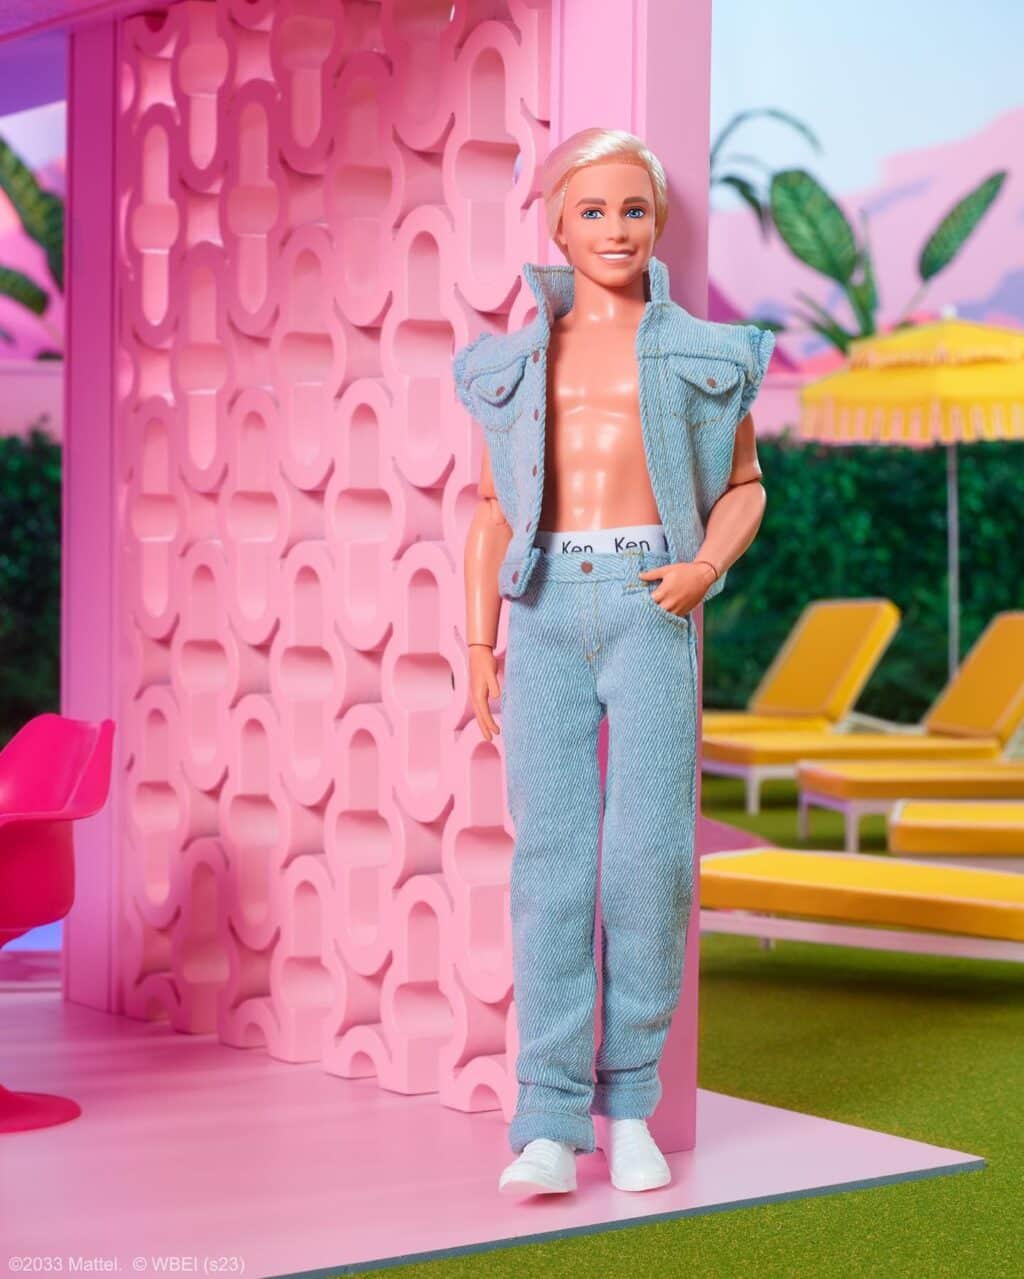 Mattel Barbie Filme